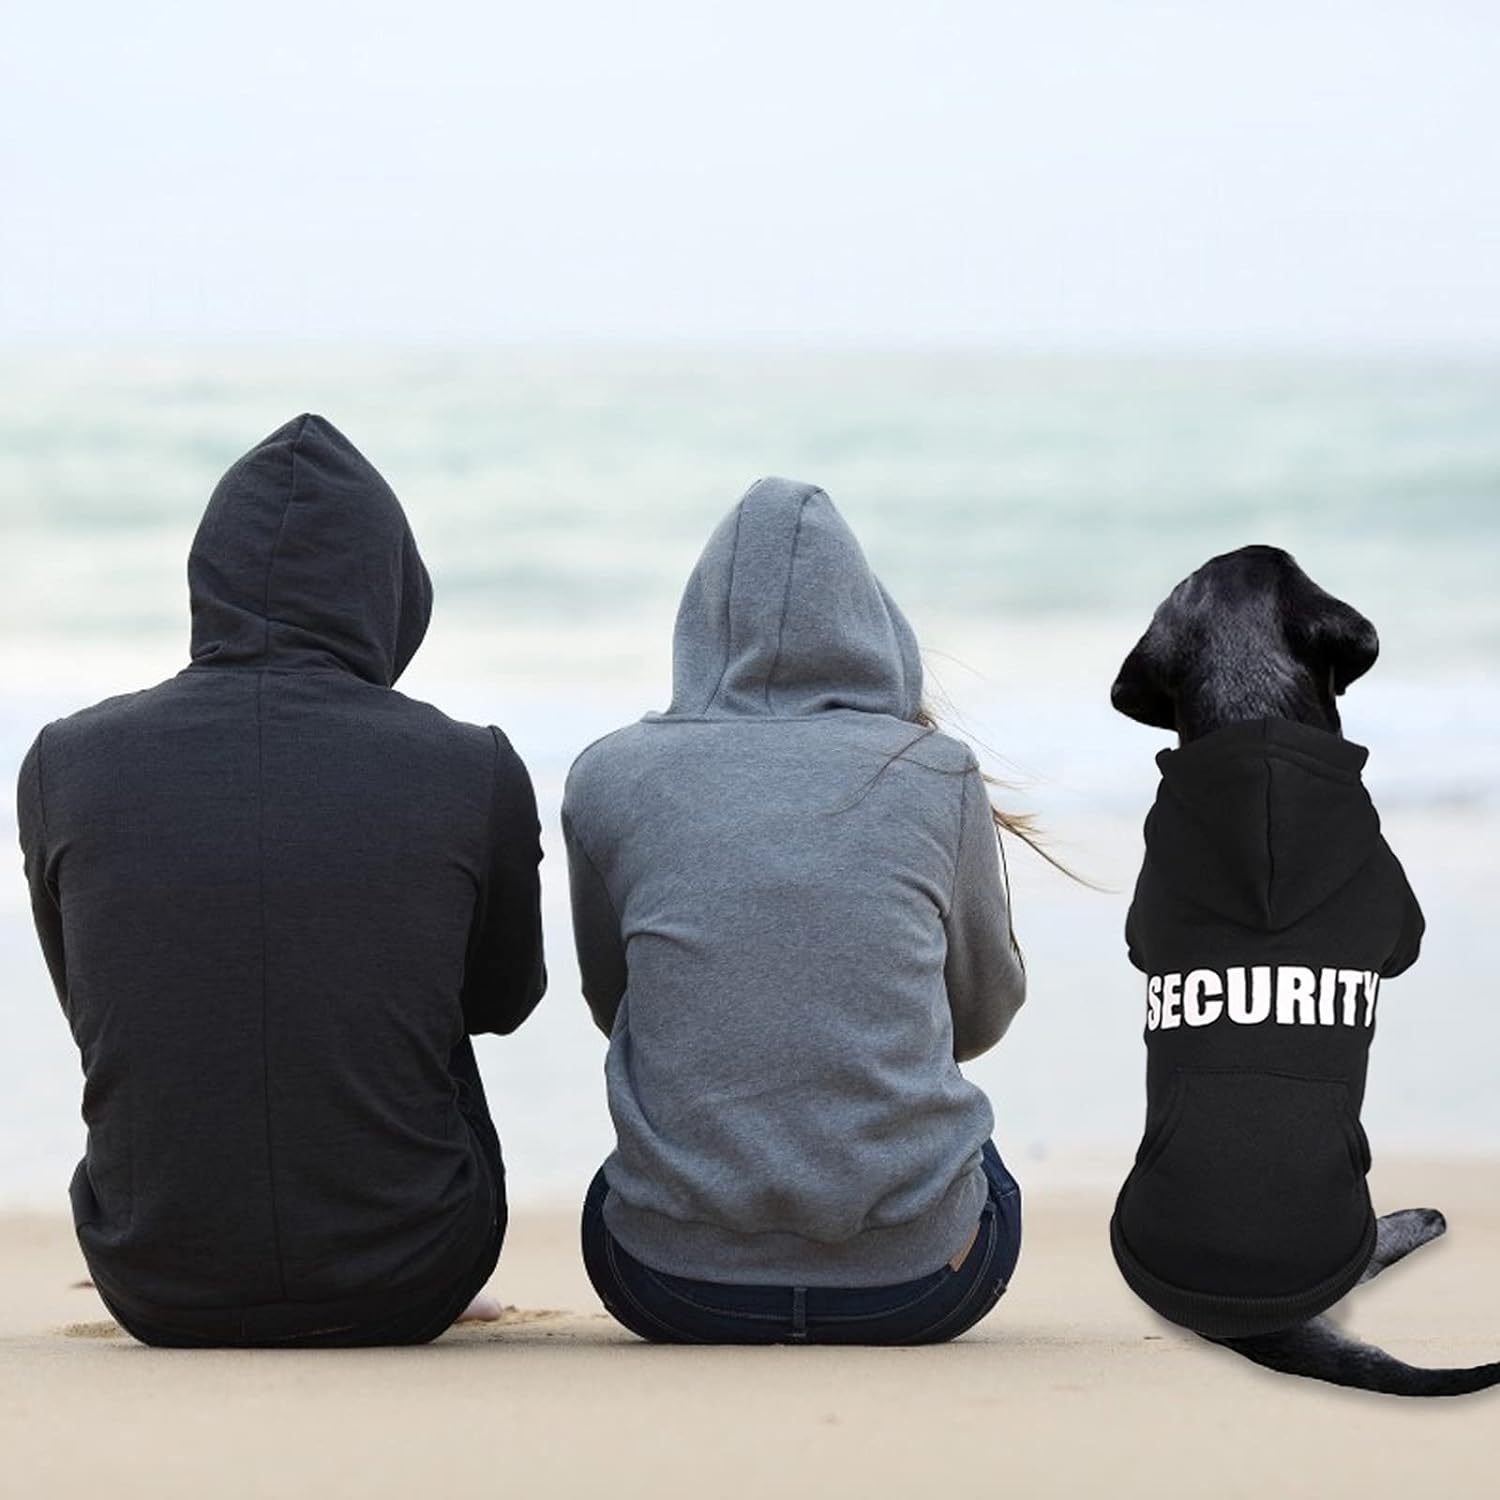 Uteuvili Dog Hoodie Security Dog Sweater Soft Brushed Fleece Dog Clothes Dog Hoodie Sweatshirt with Pocket Dog Sweaters for Medium Dogs(M), Black